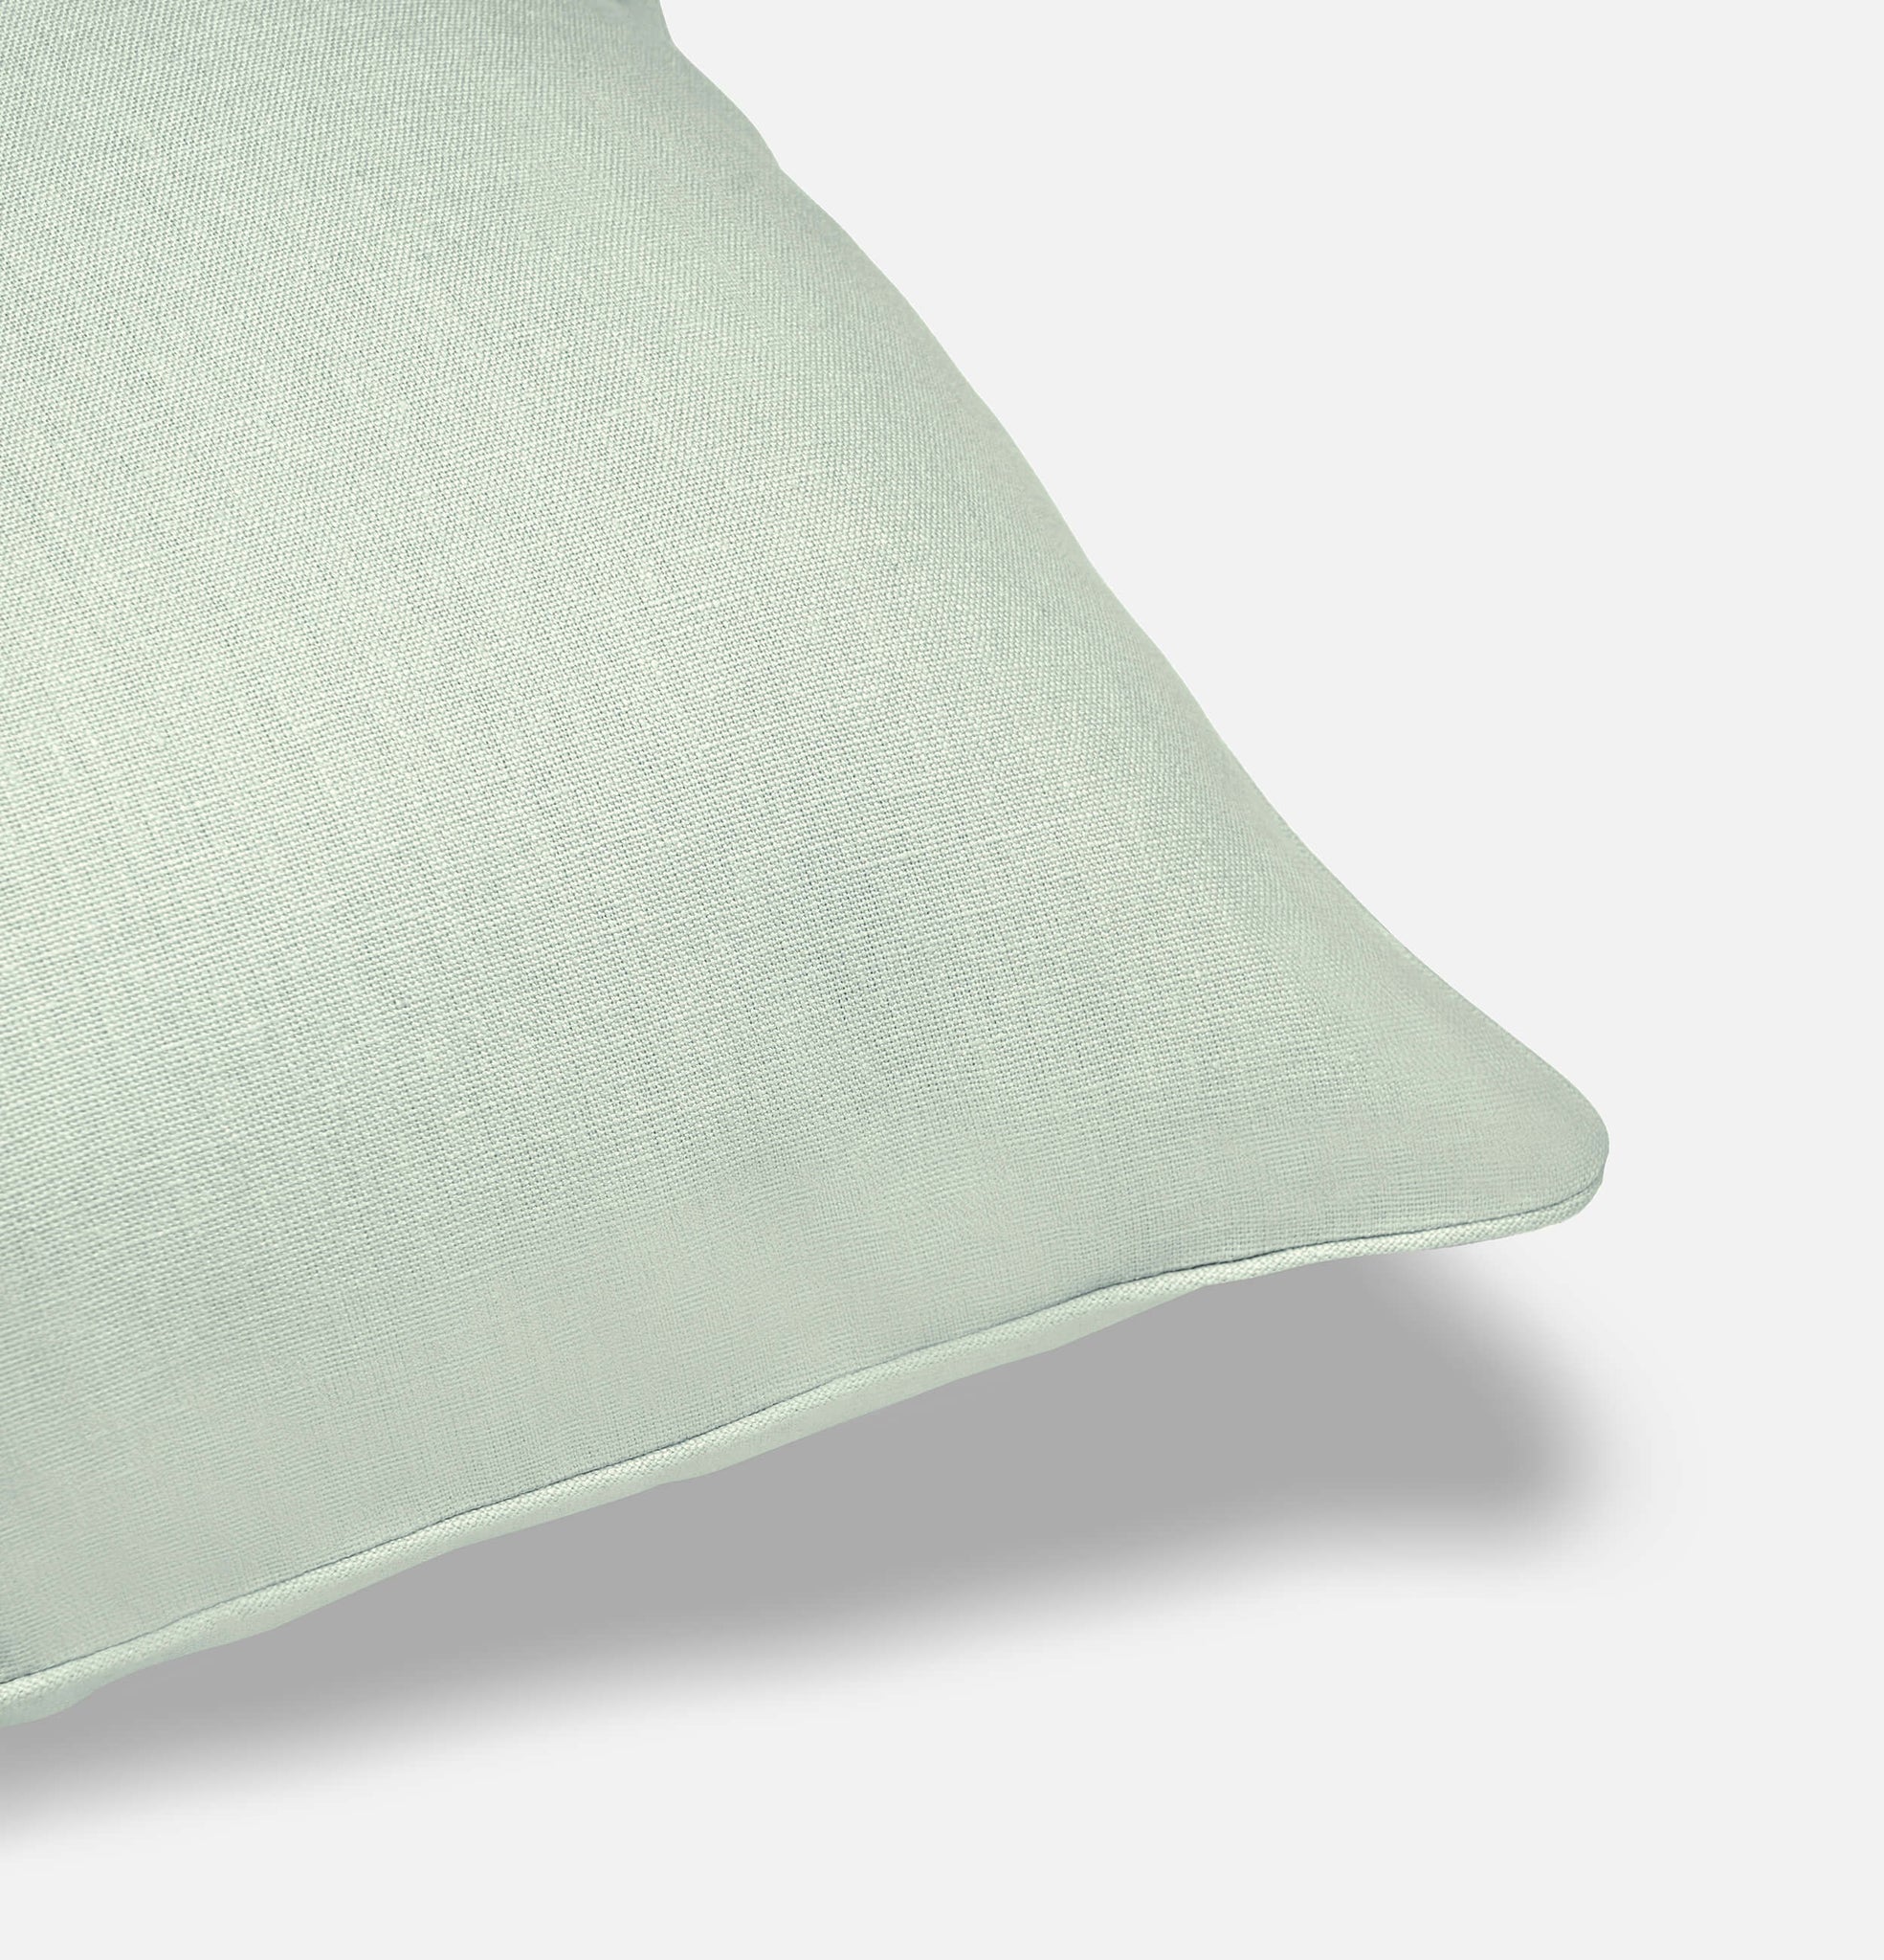 Corner detail of spring blue linen cushion